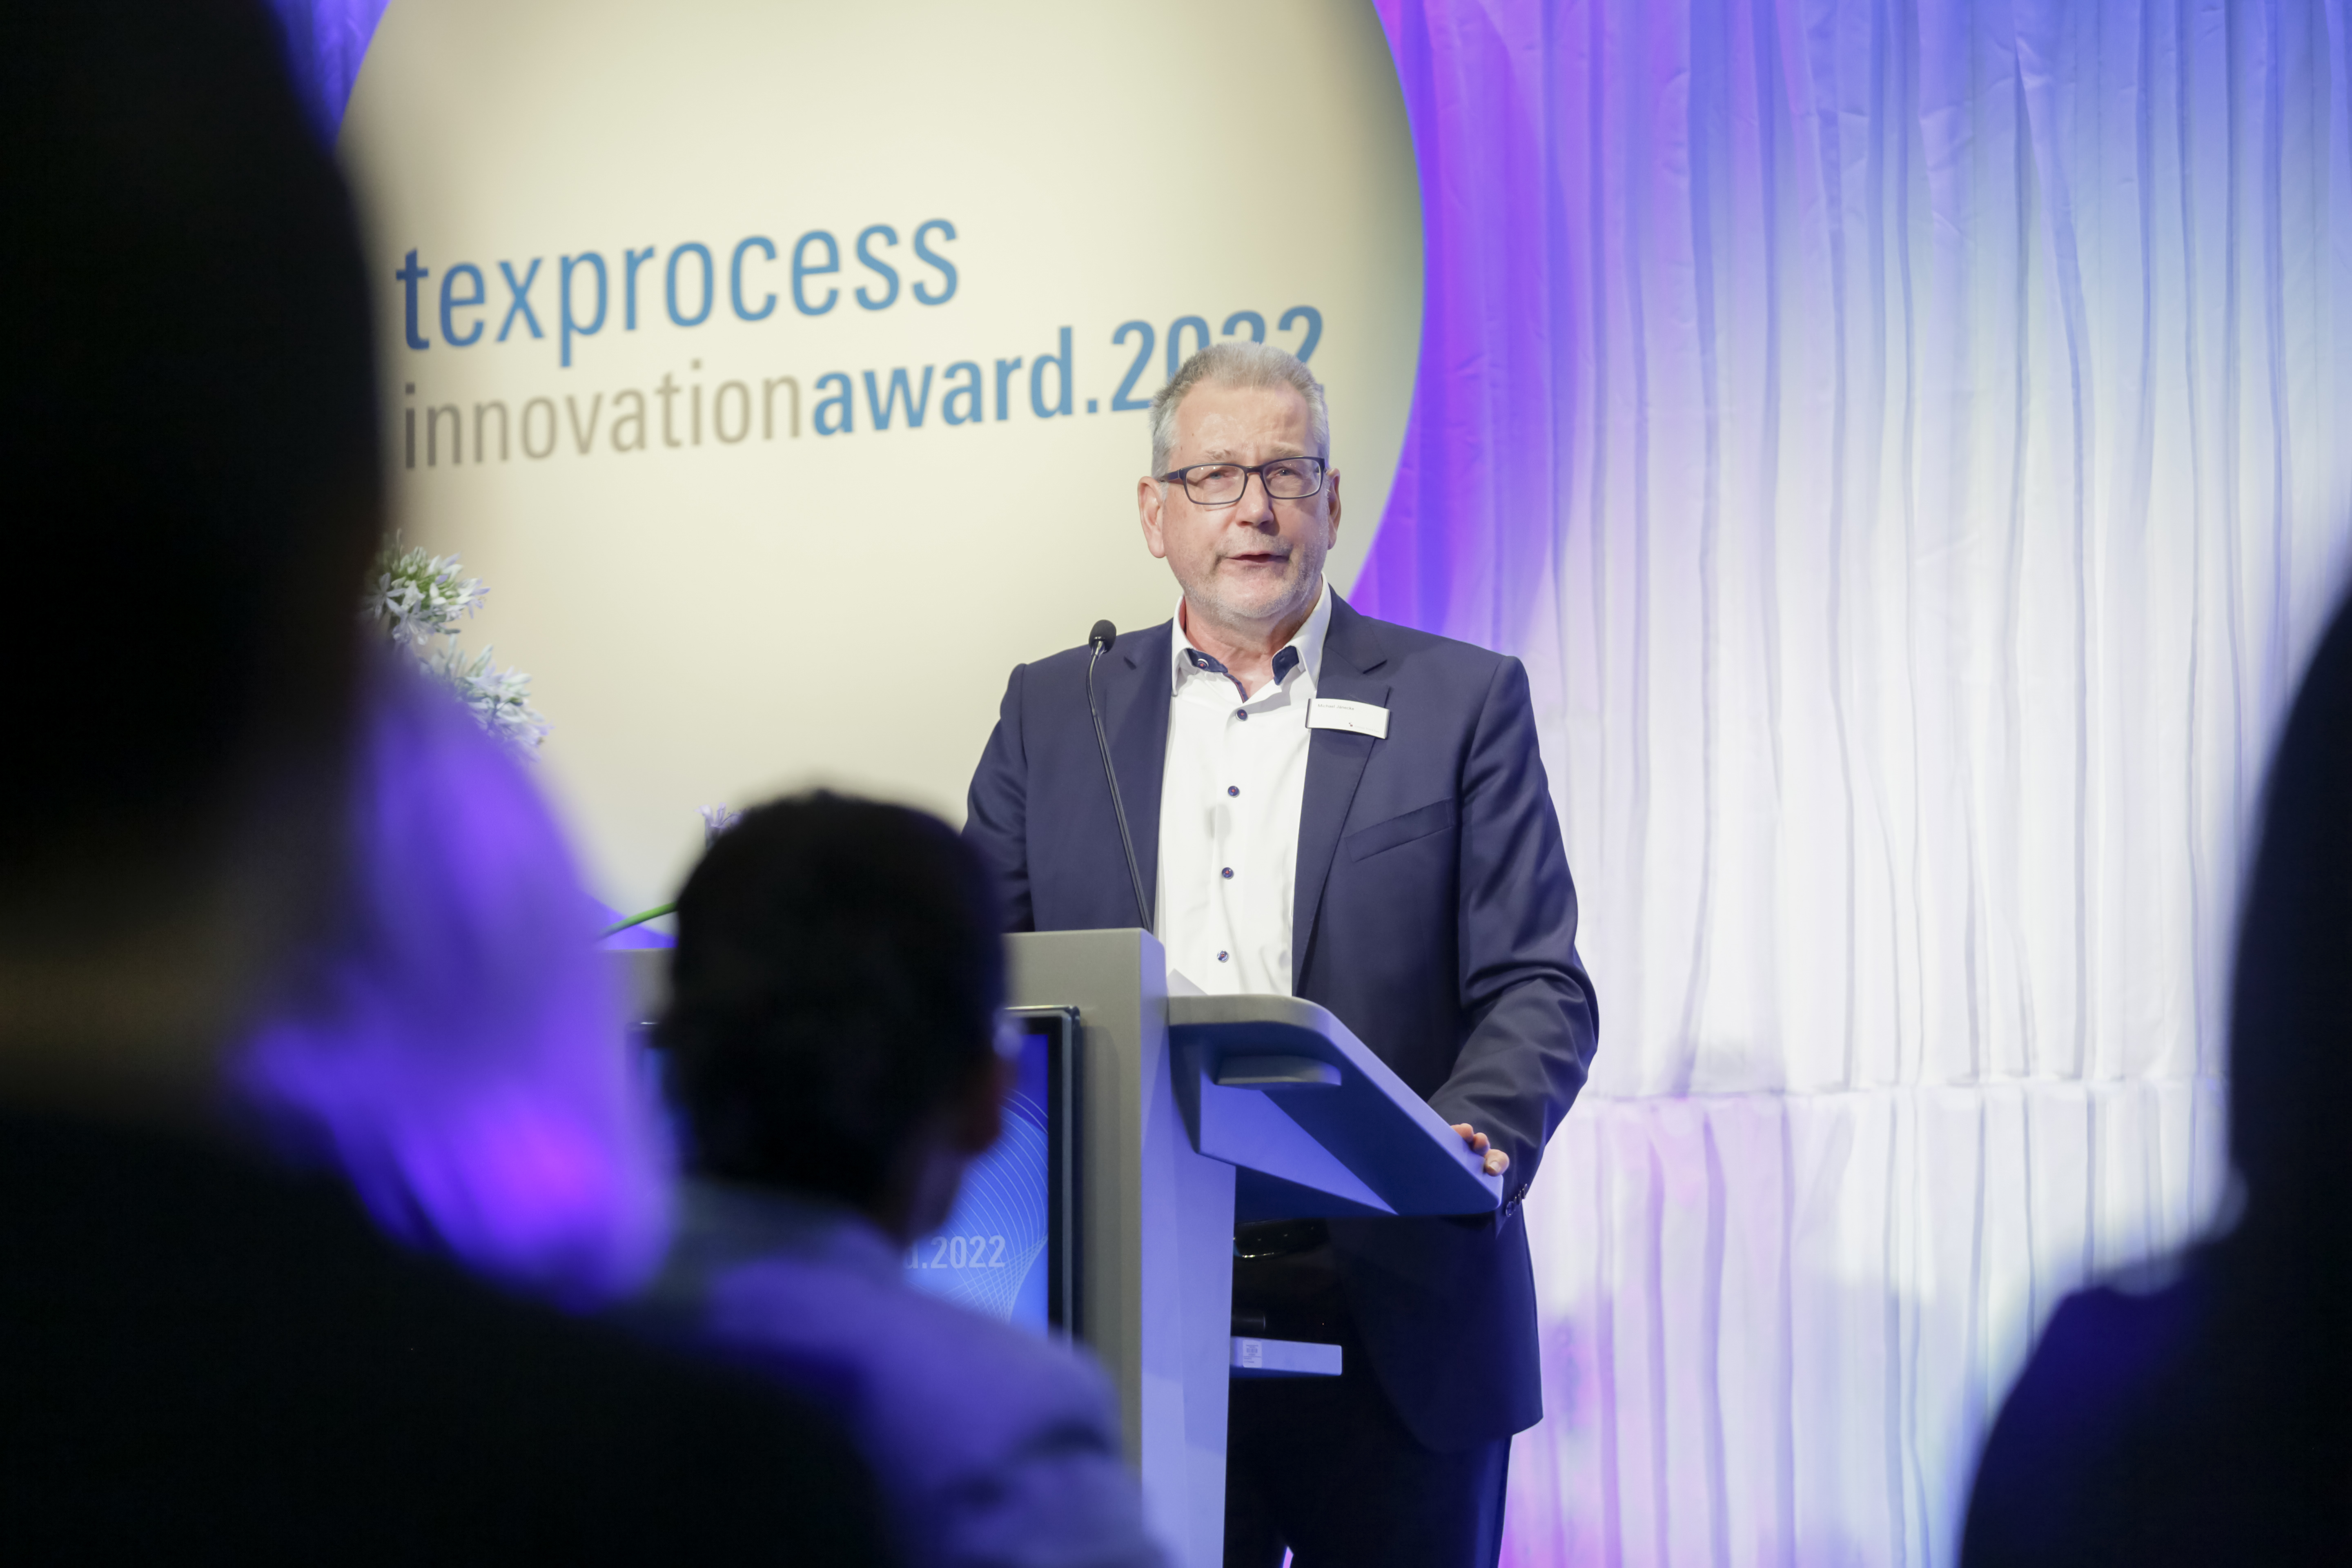 Techtextil + Texprocess Innovation Award 2022 / Michael Jänecke